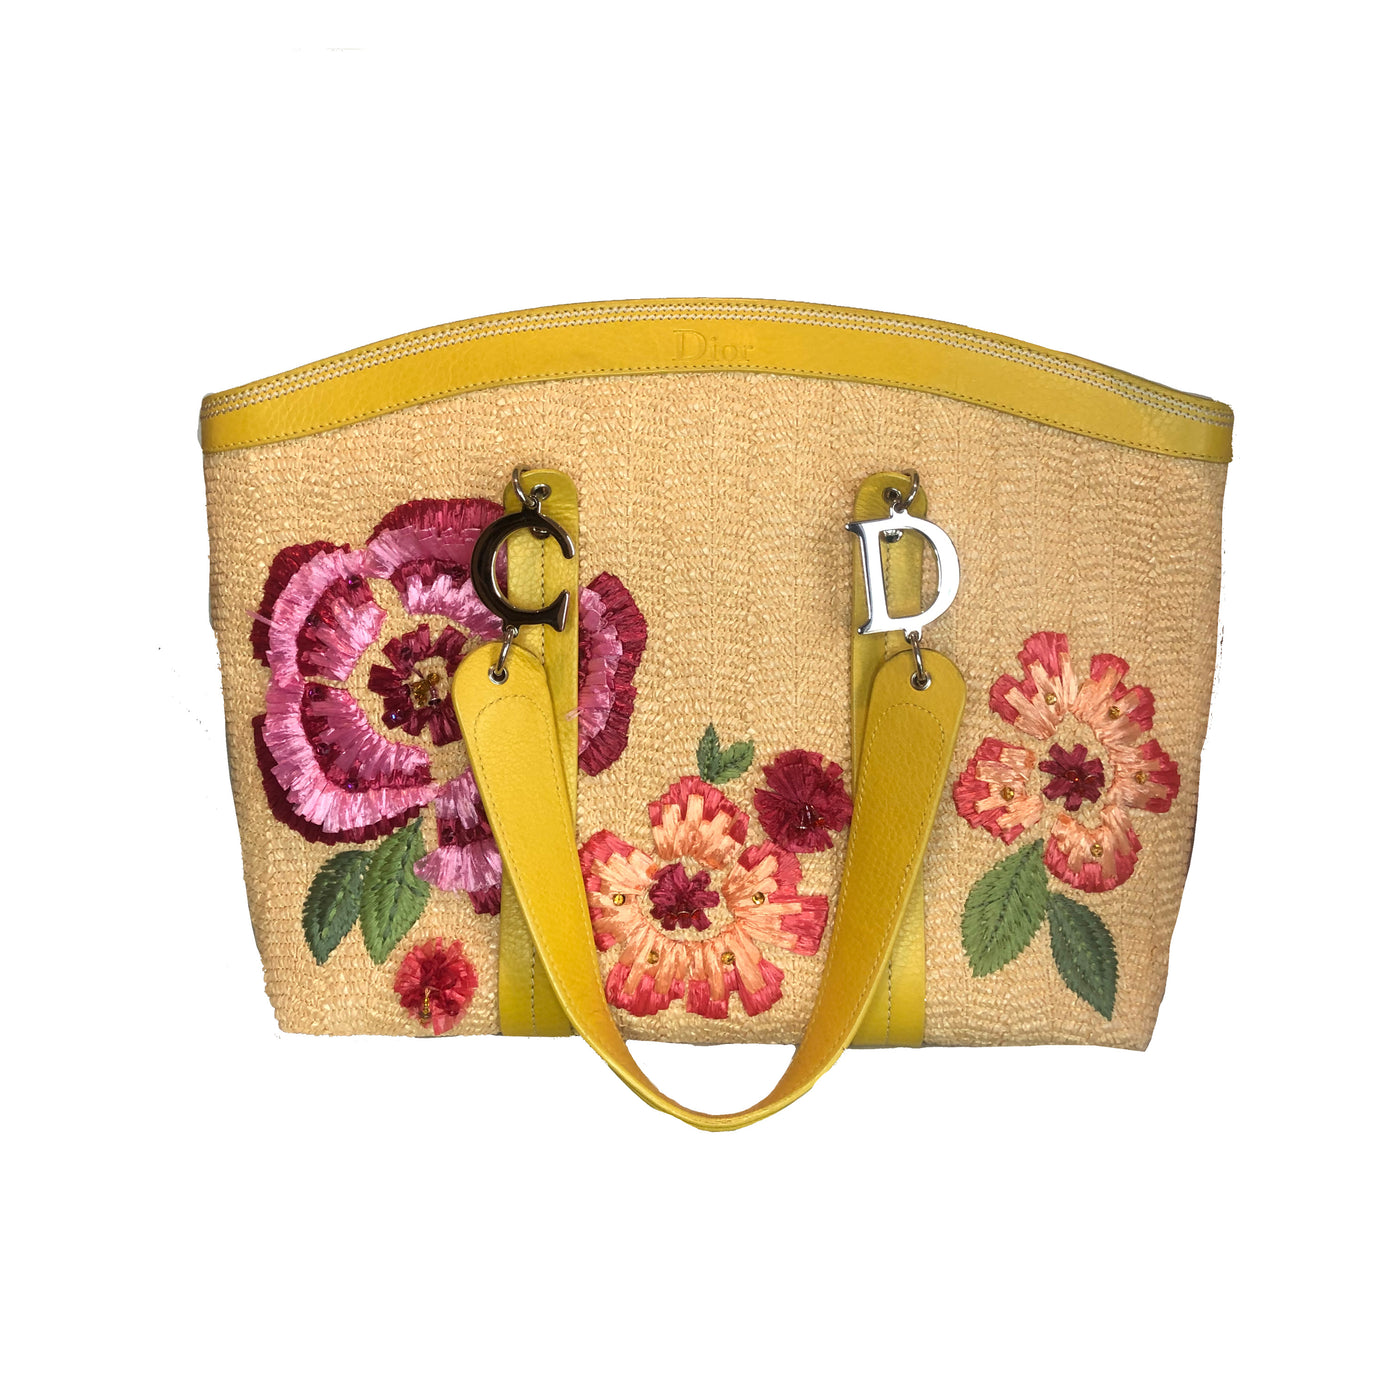 CHRISTIAN DIOR Limited Edition floral raffia tote handbag by John Galliano